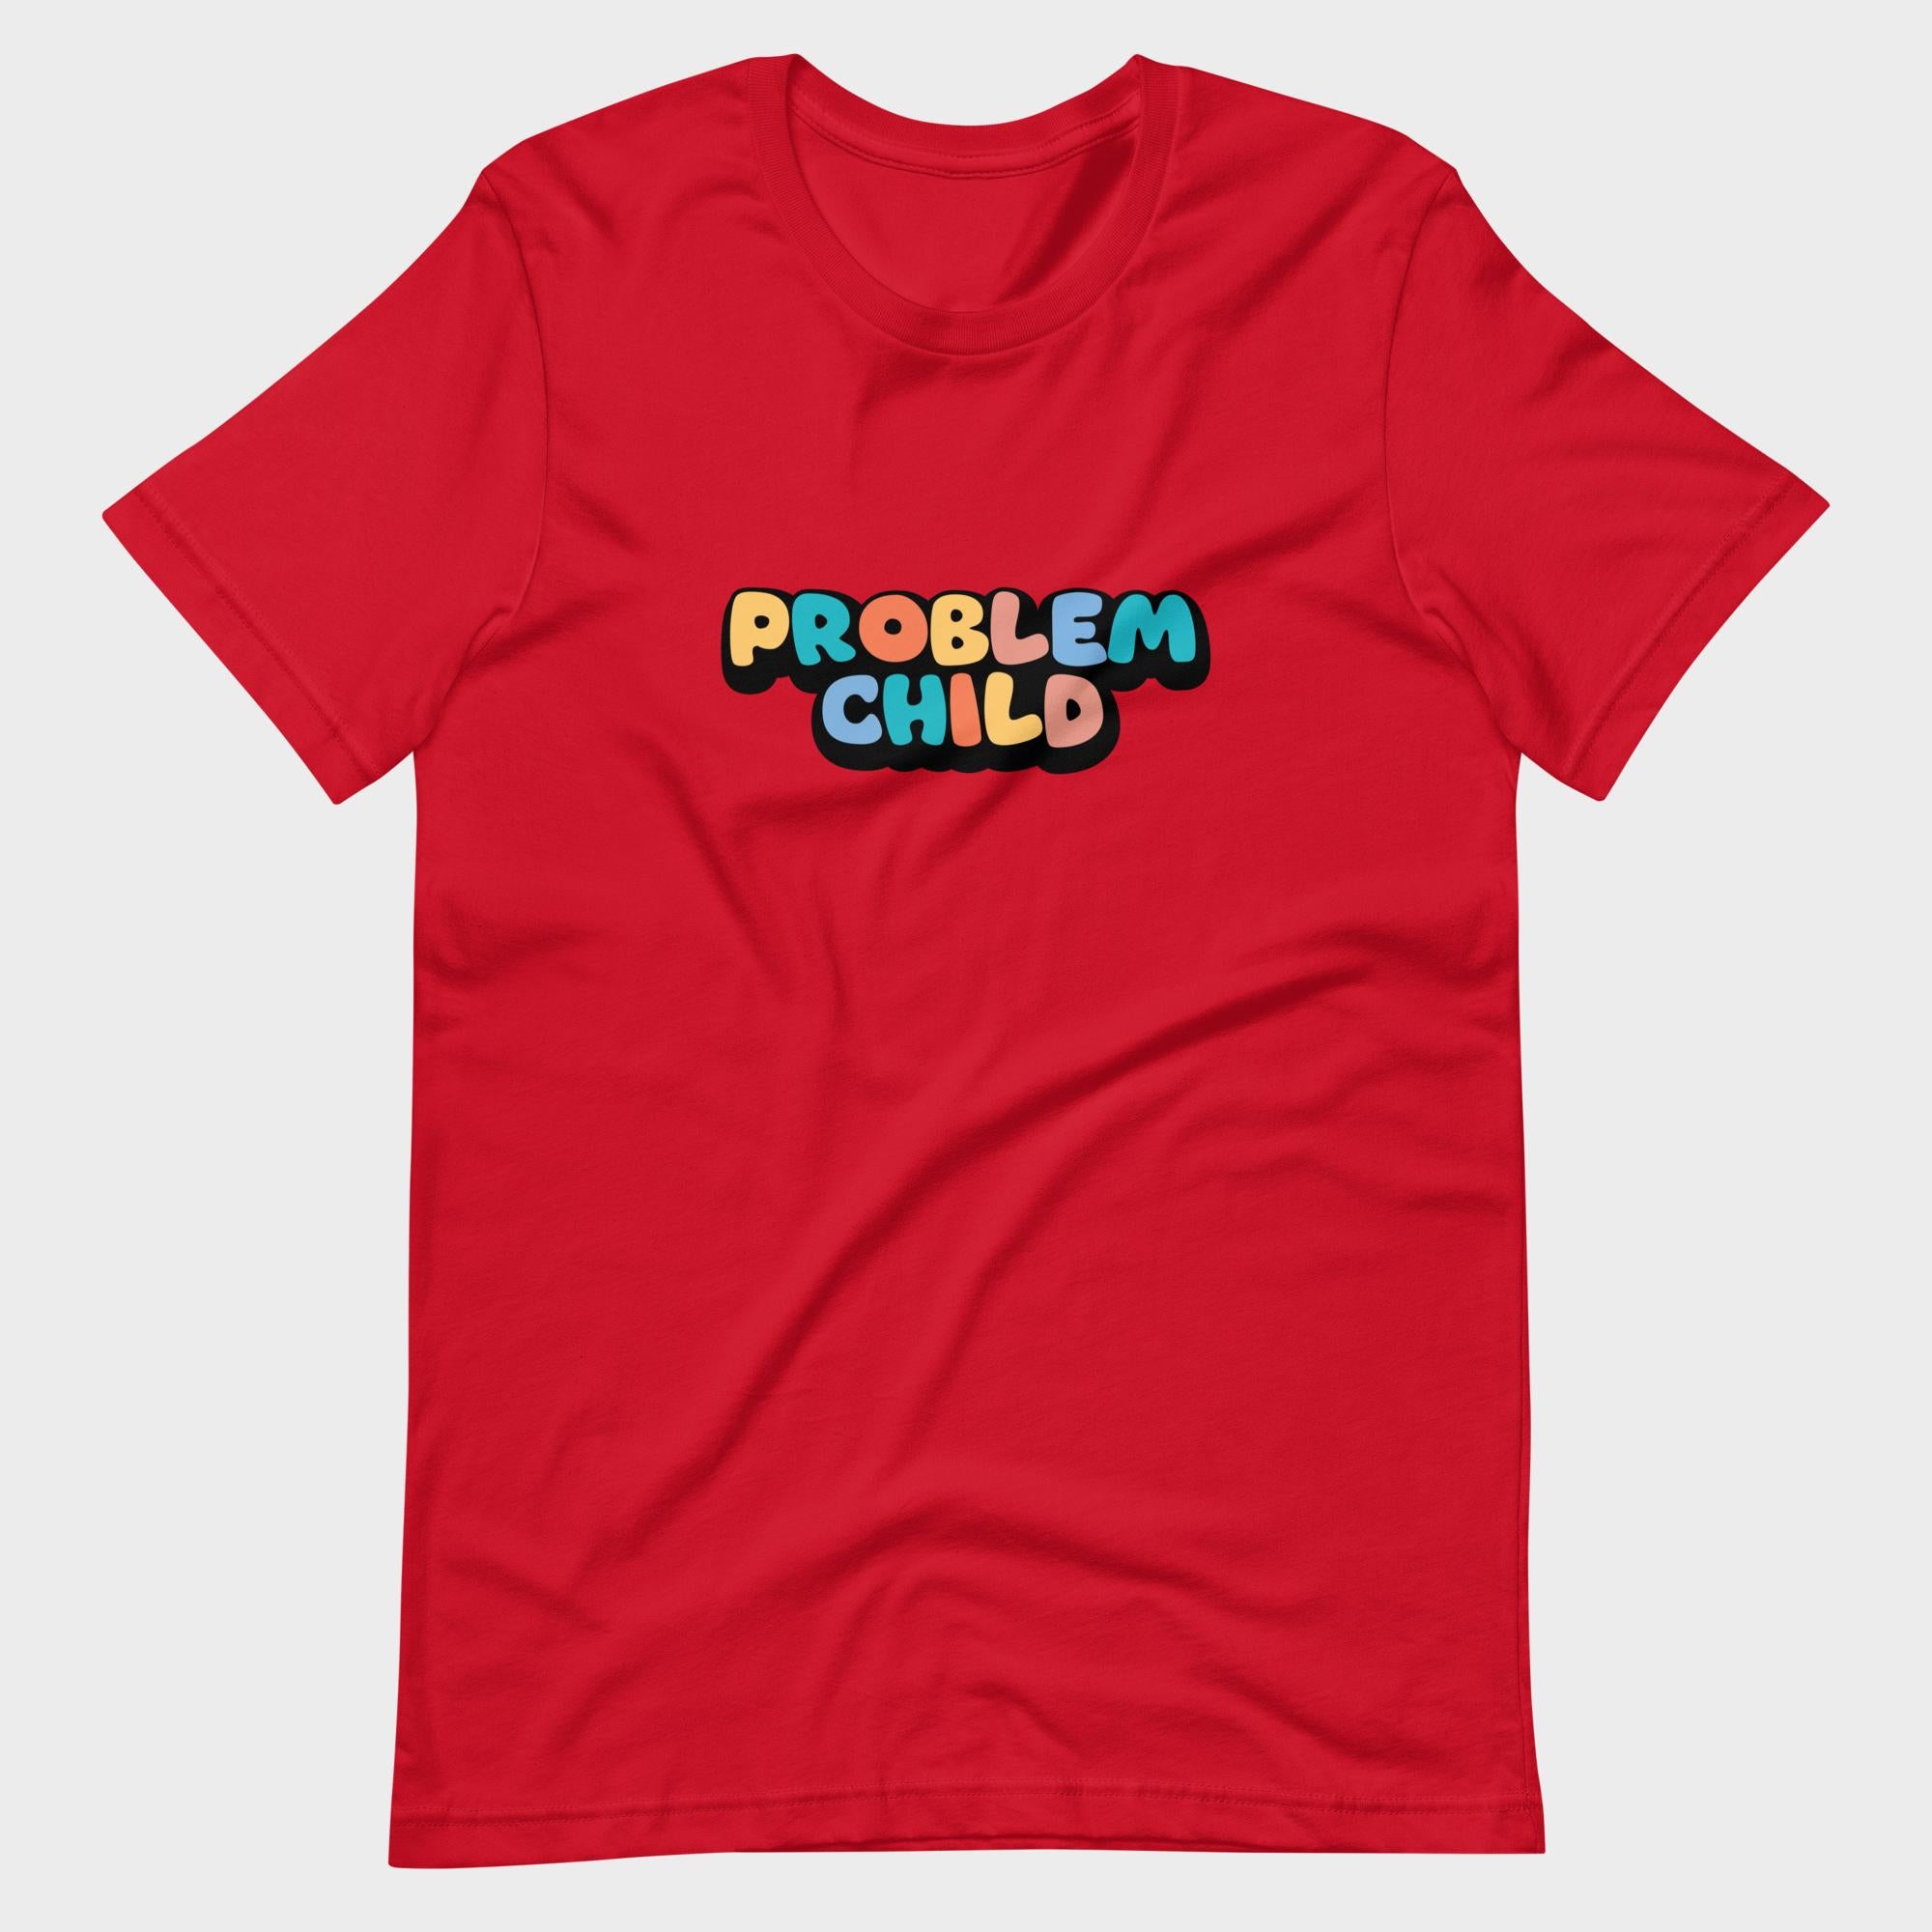 Problem Child - T-Shirt